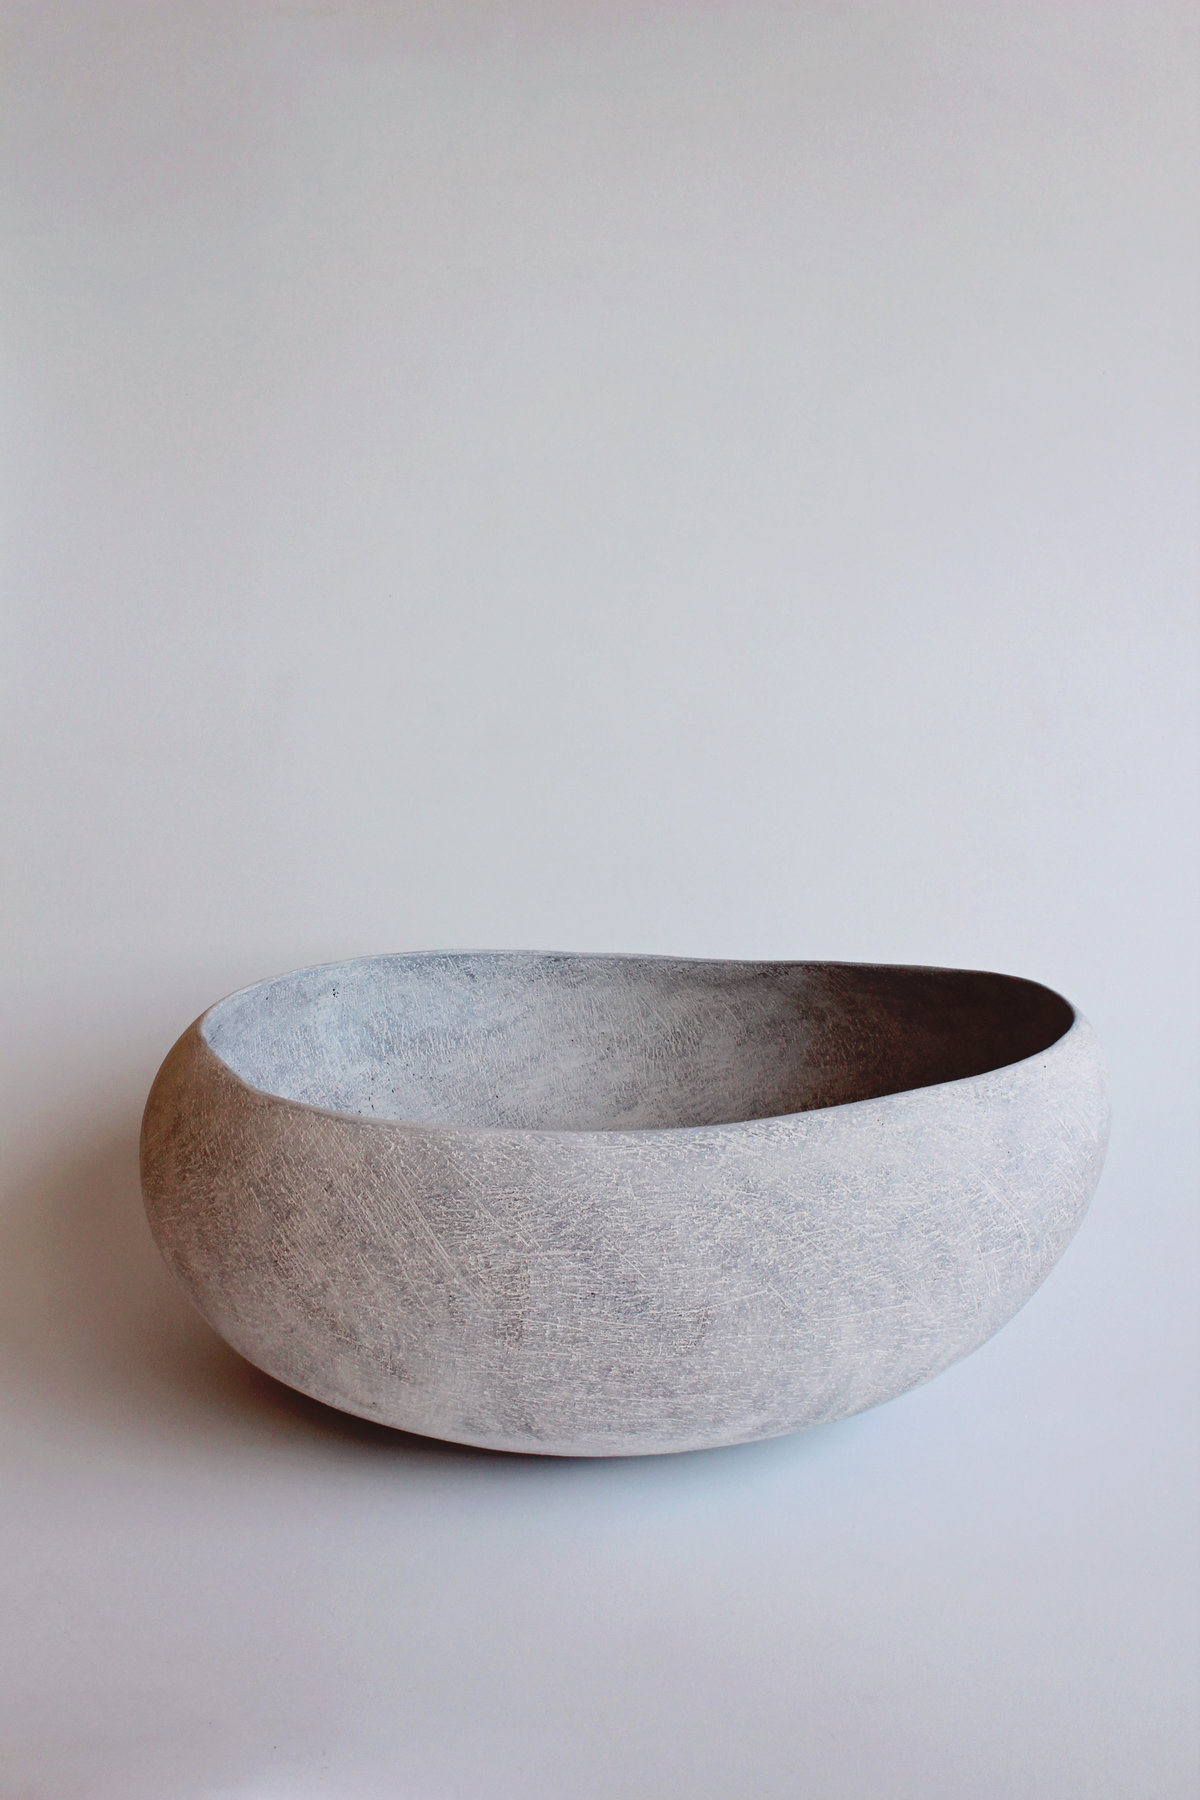 Yasha-Butler-Ceramic-Sculpture-Bowl-White-Lithic_1432-3500px